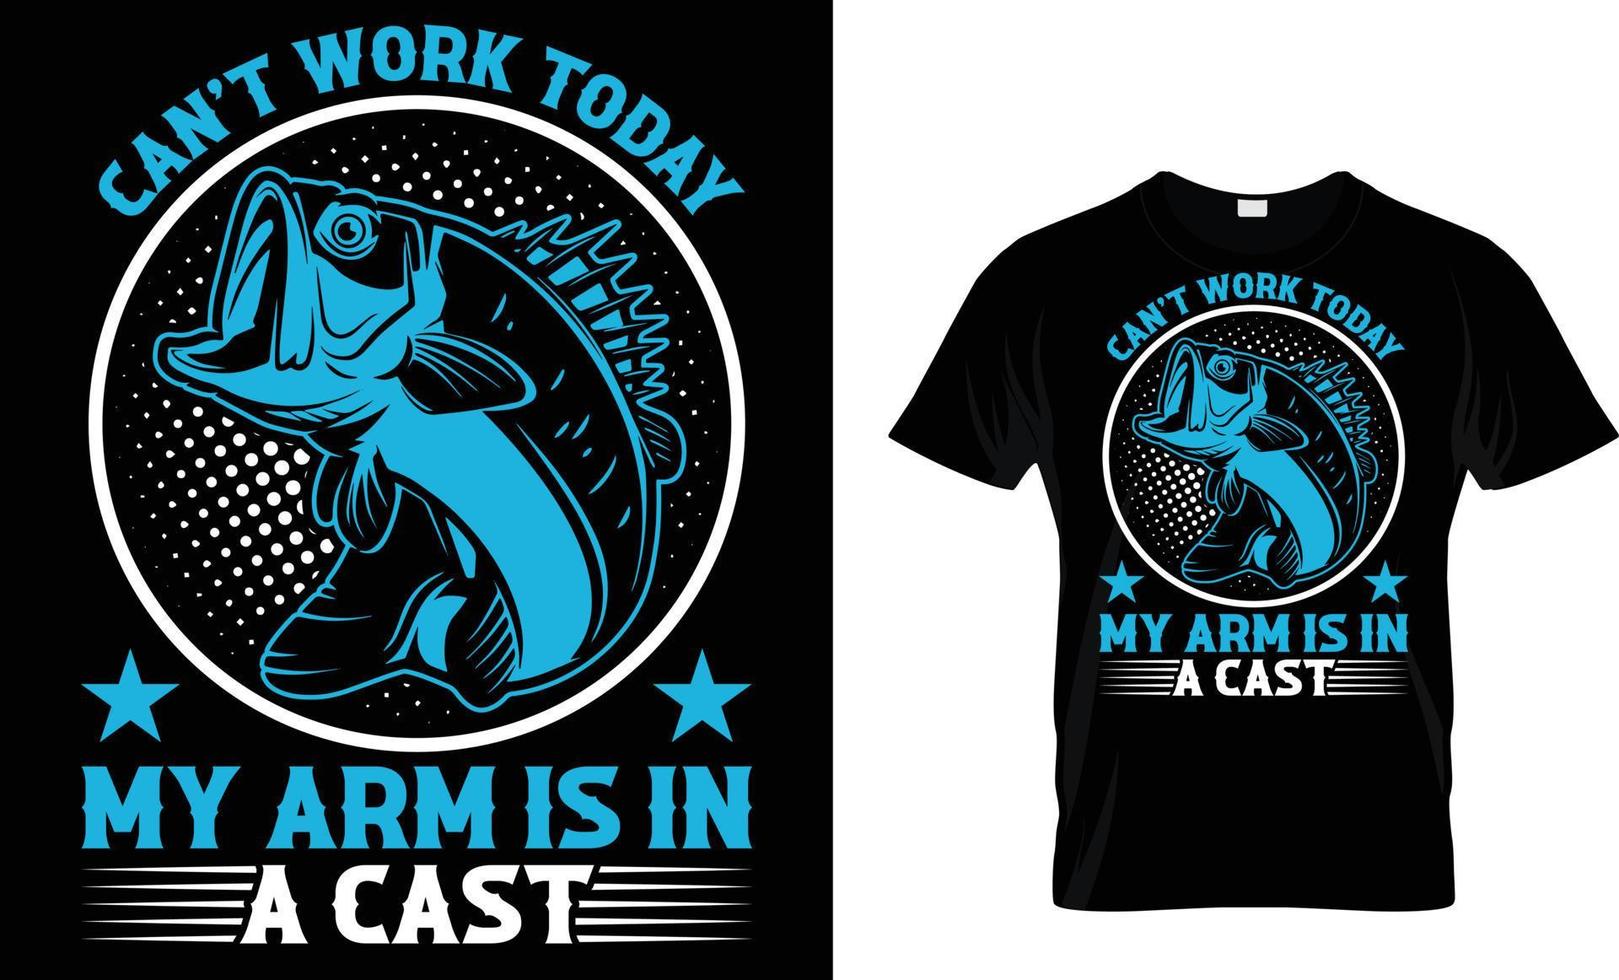 Fishing, typography, vector T-Shirt design